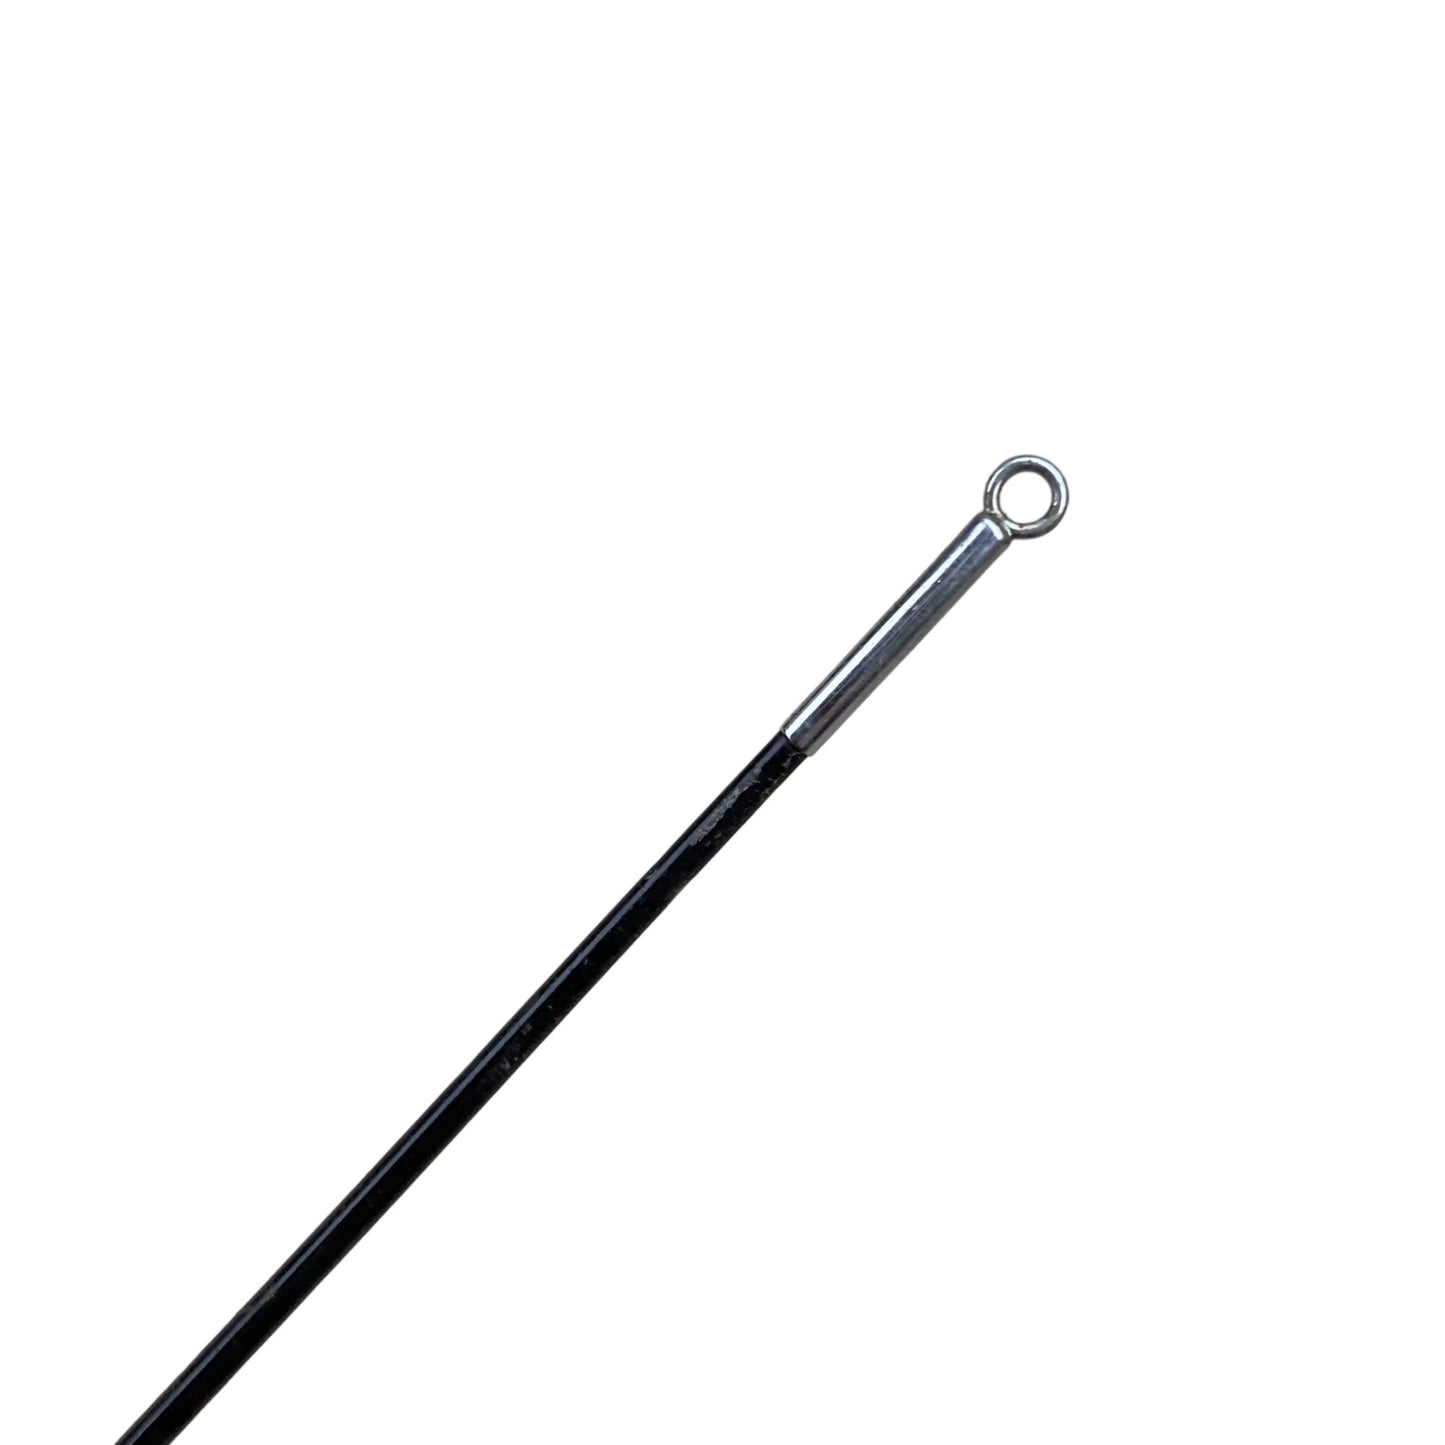 Cabela's Classic Crappie Pole 16.5' Telescoping Fiberglass Cane Pole Fishing Rod